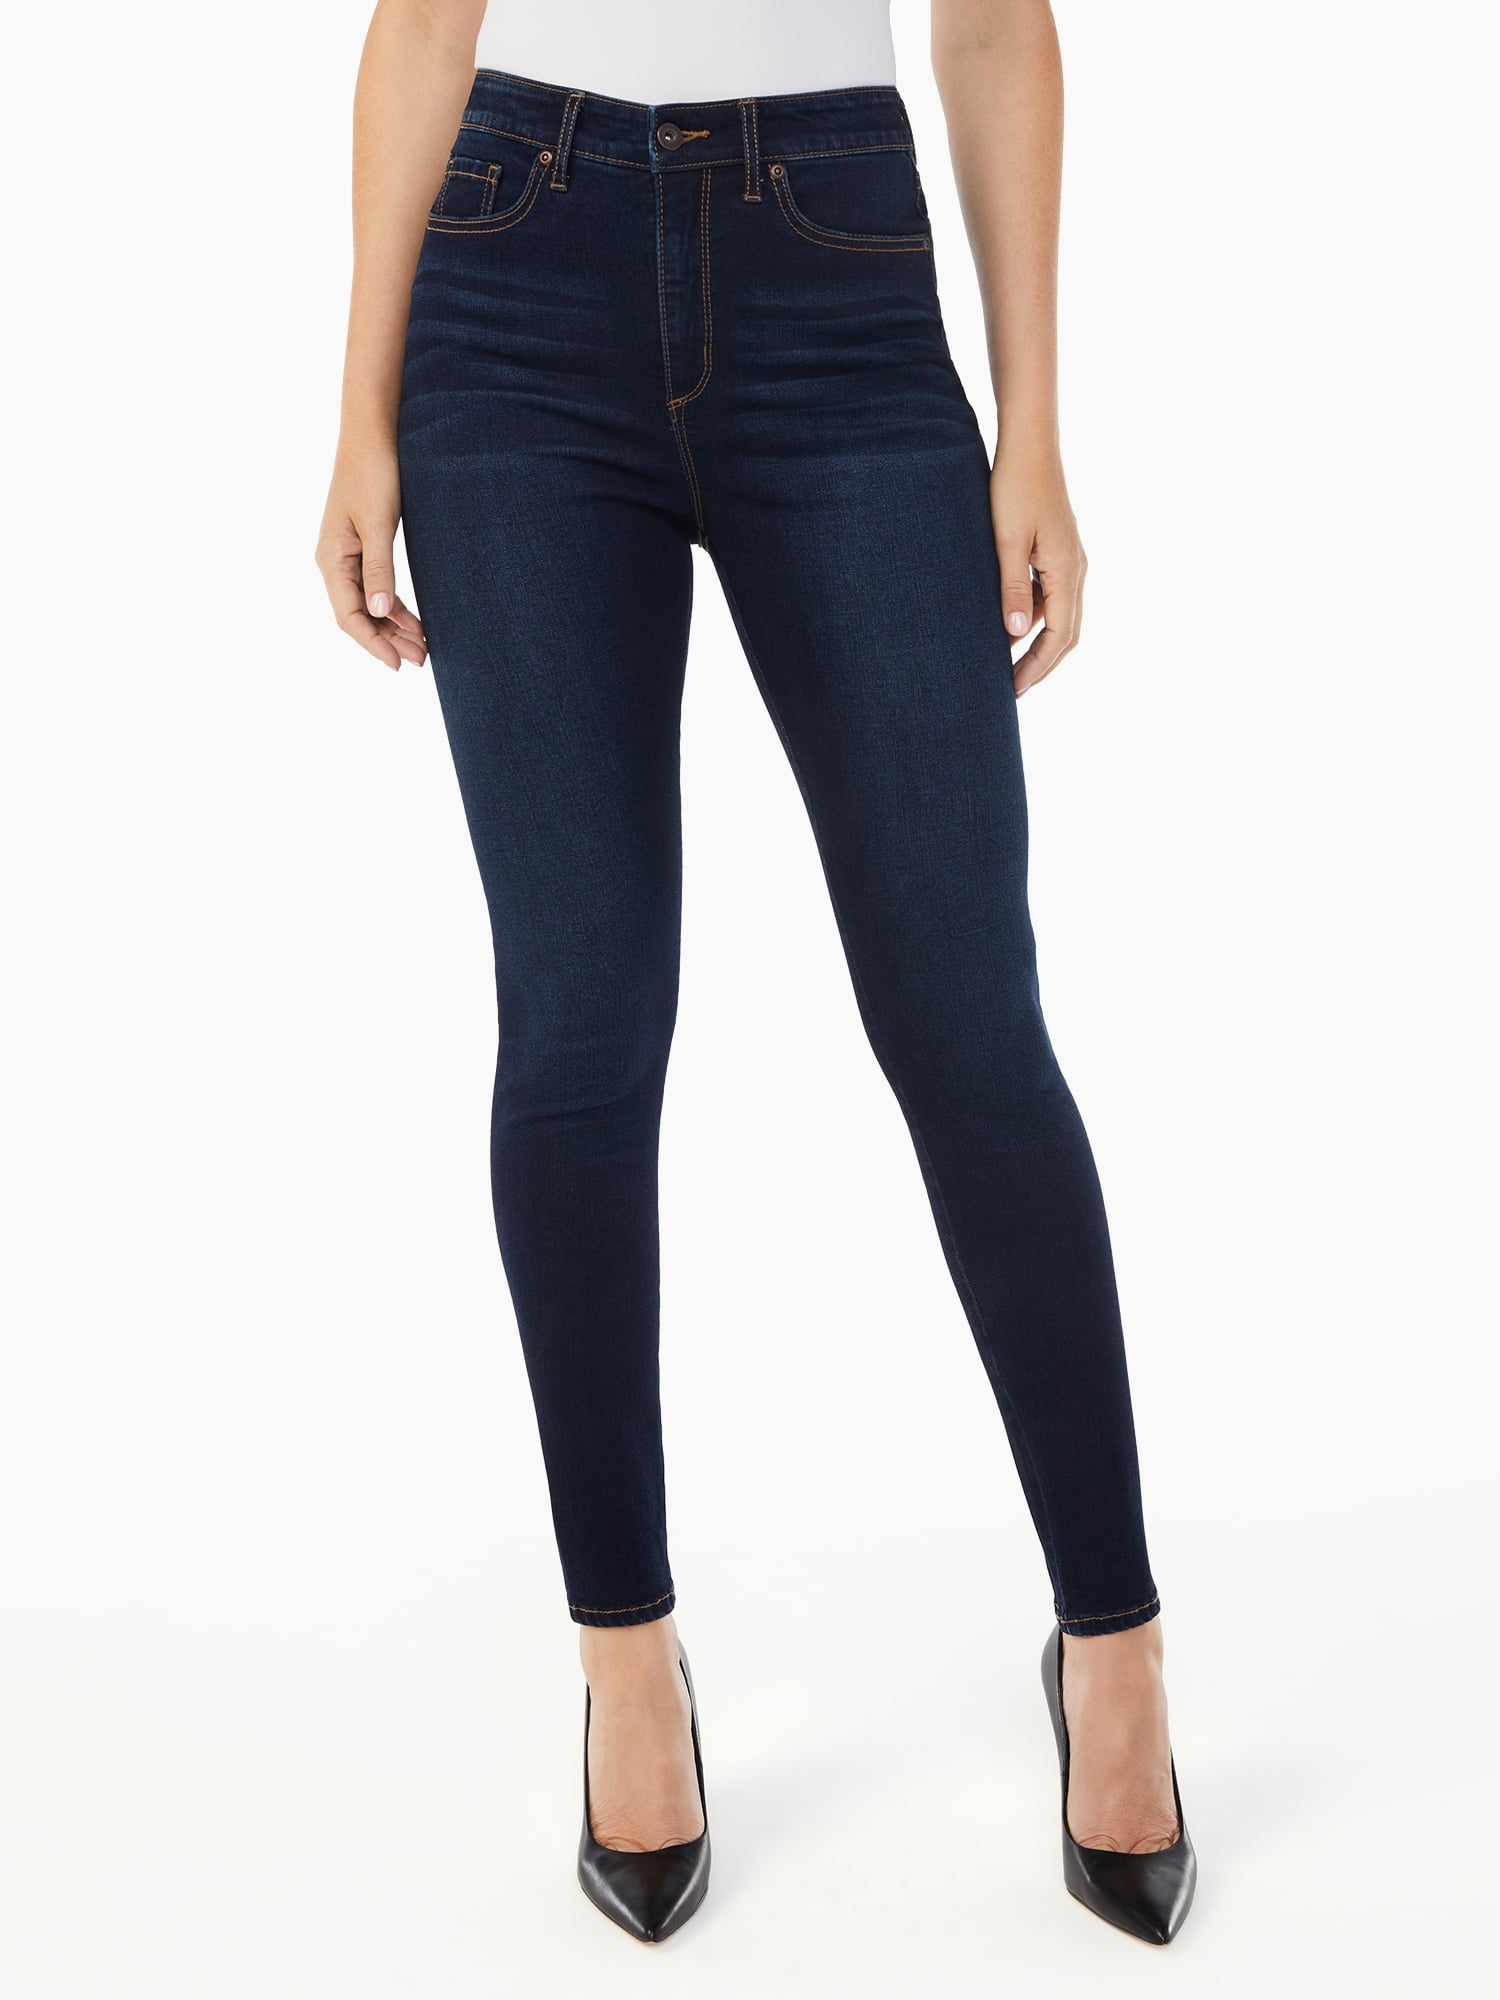 Sofia Jeans Women's Rosa Curvy Skinny Super High Rise Seamless Jeans 